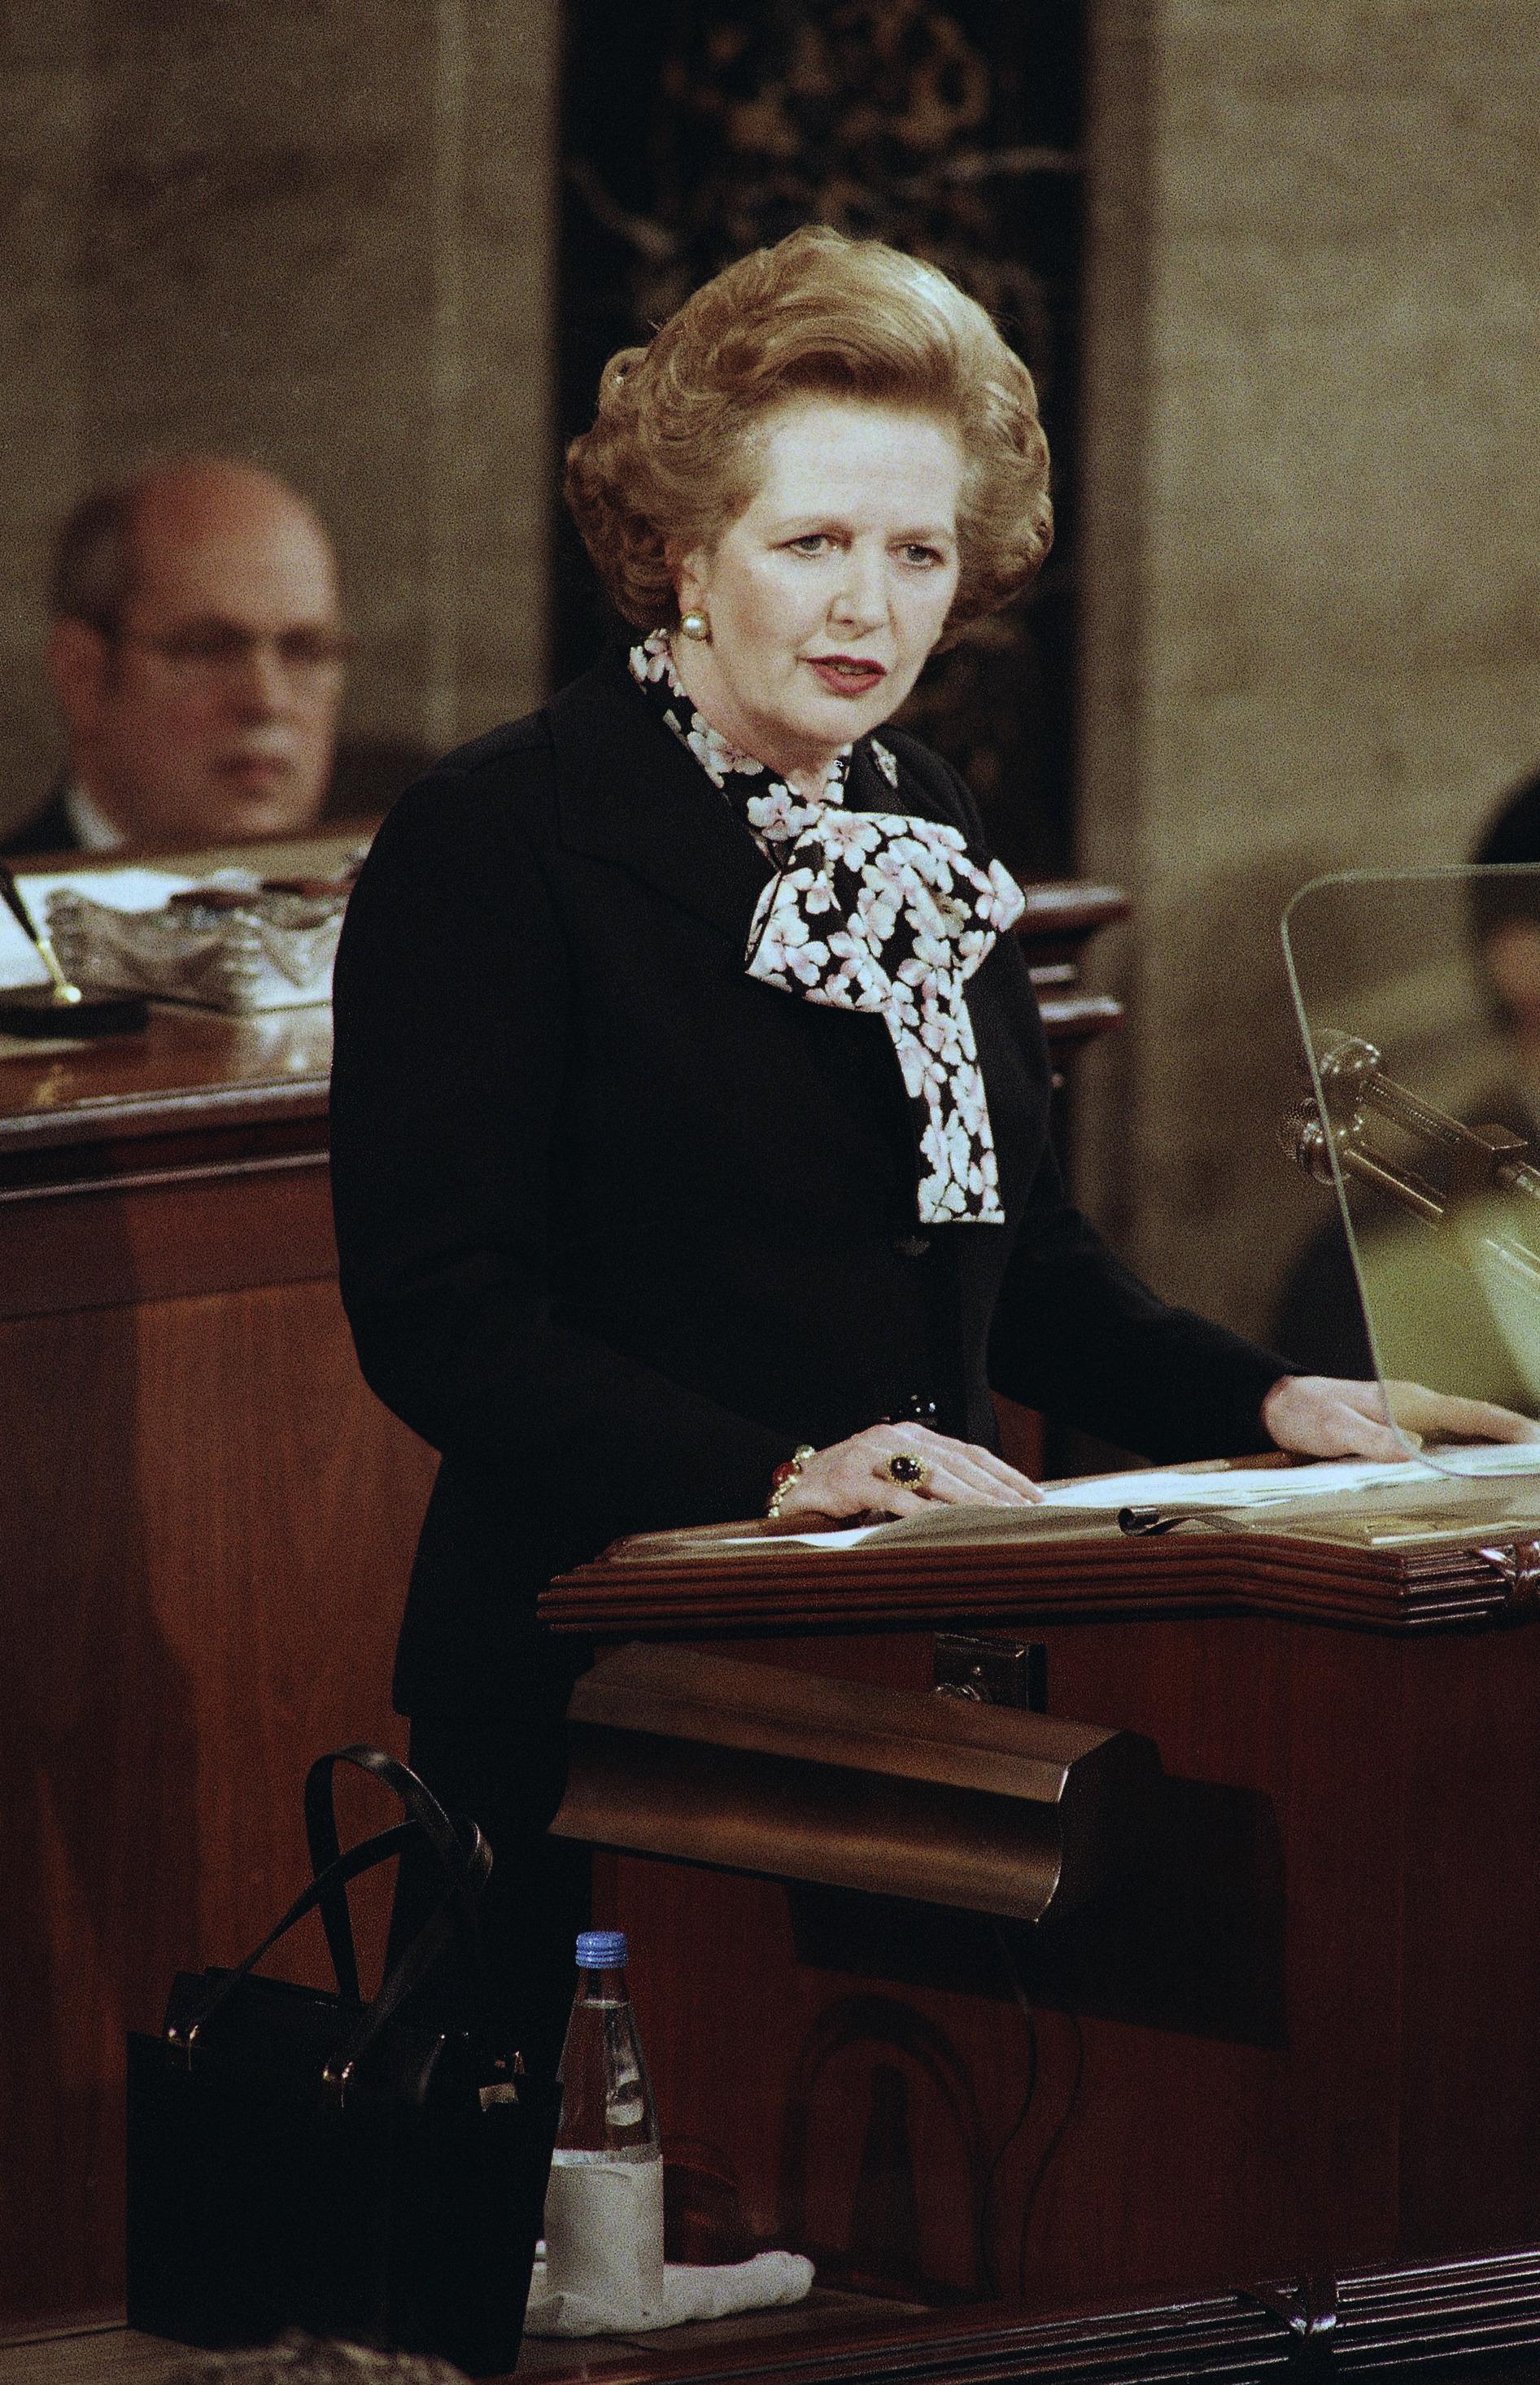 Margaret Thatcher brukade också bära knytblus ofta. 